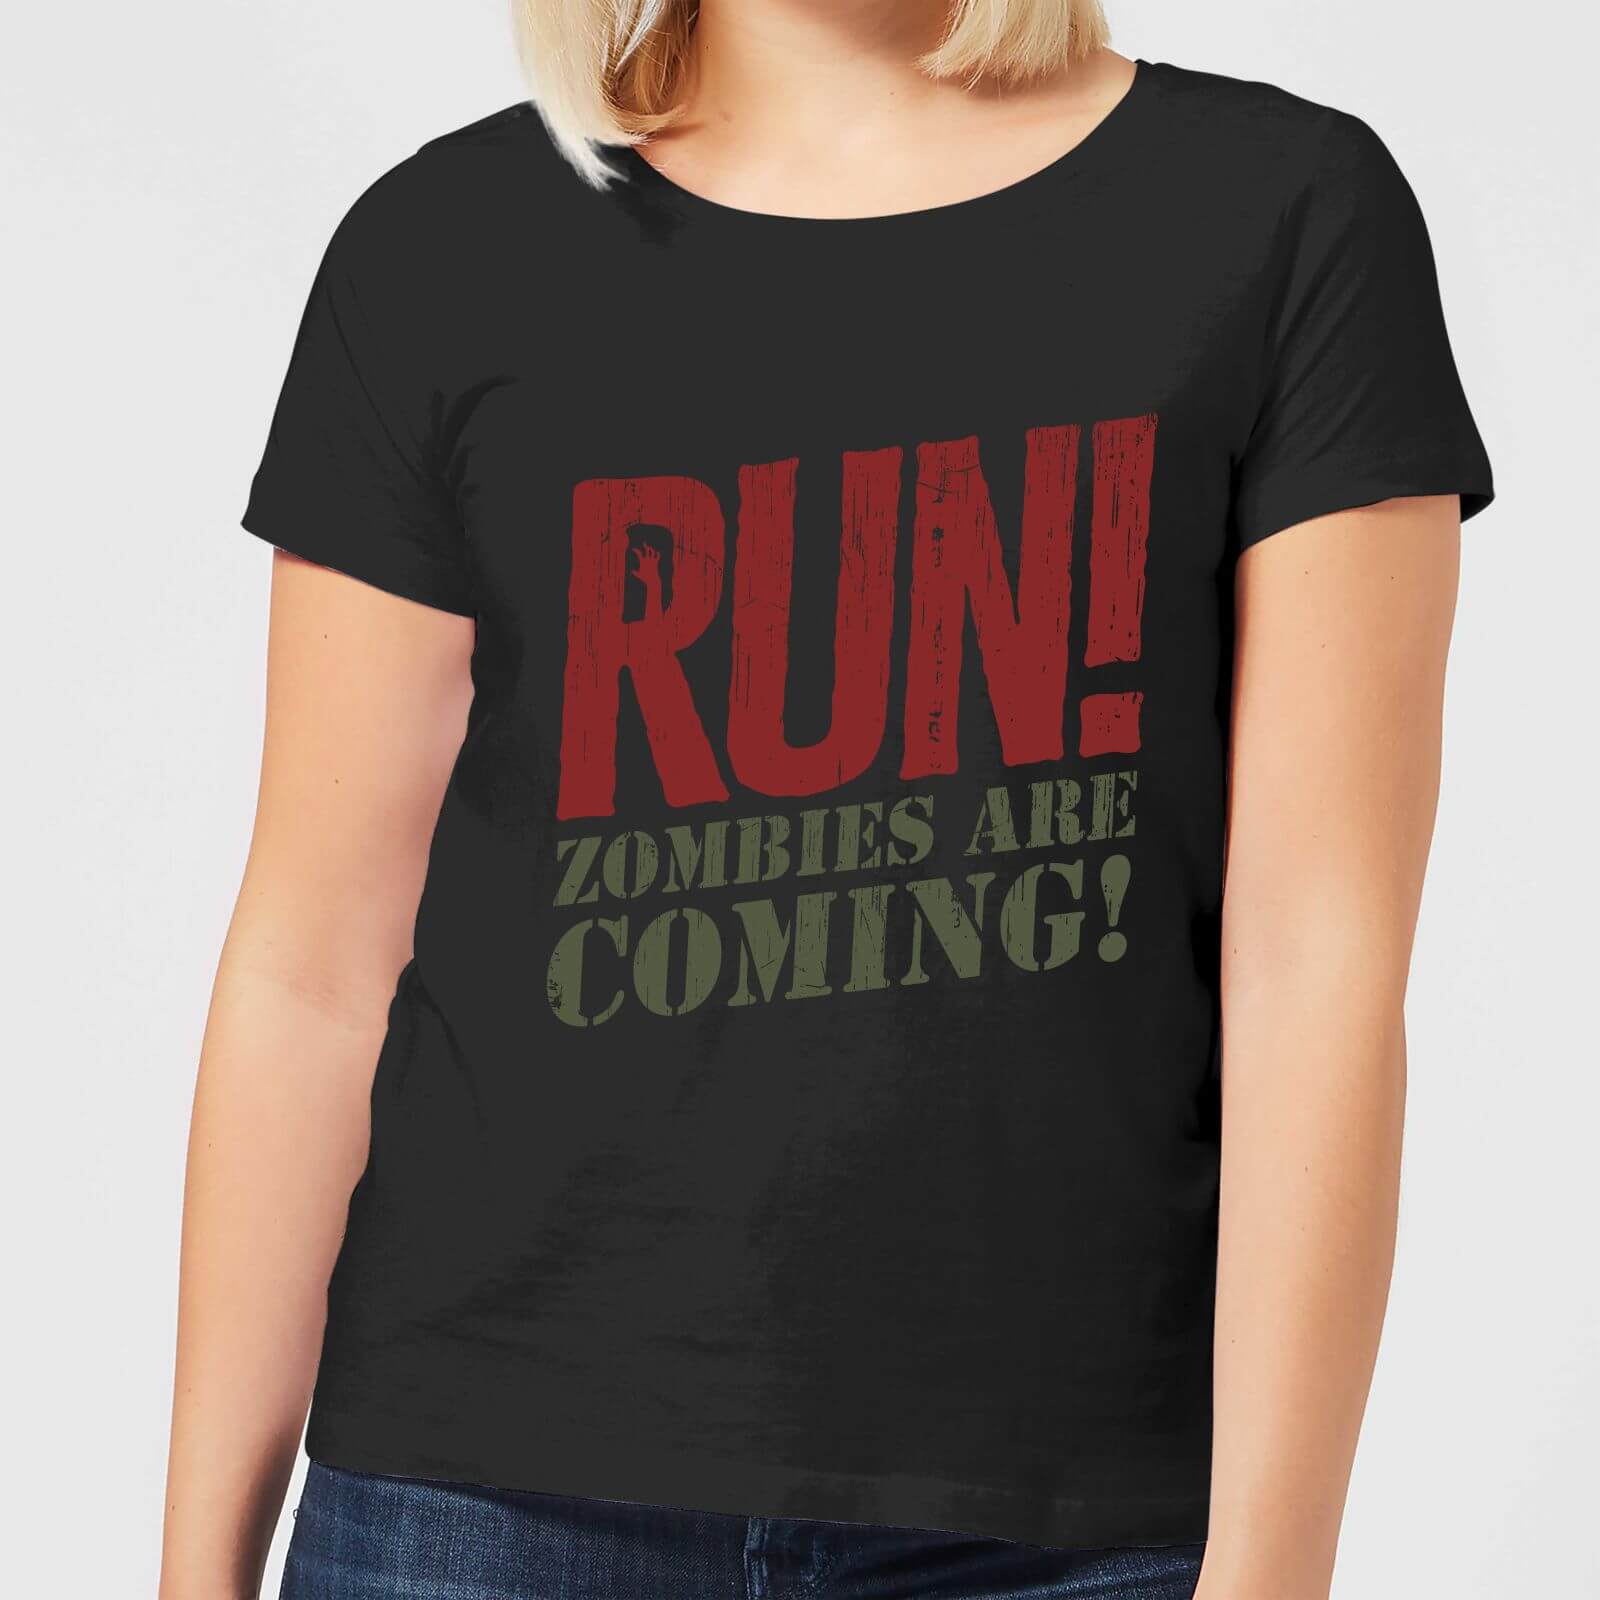 RUN! Zombies Are Coming! Women's T-Shirt - Black - L - Black